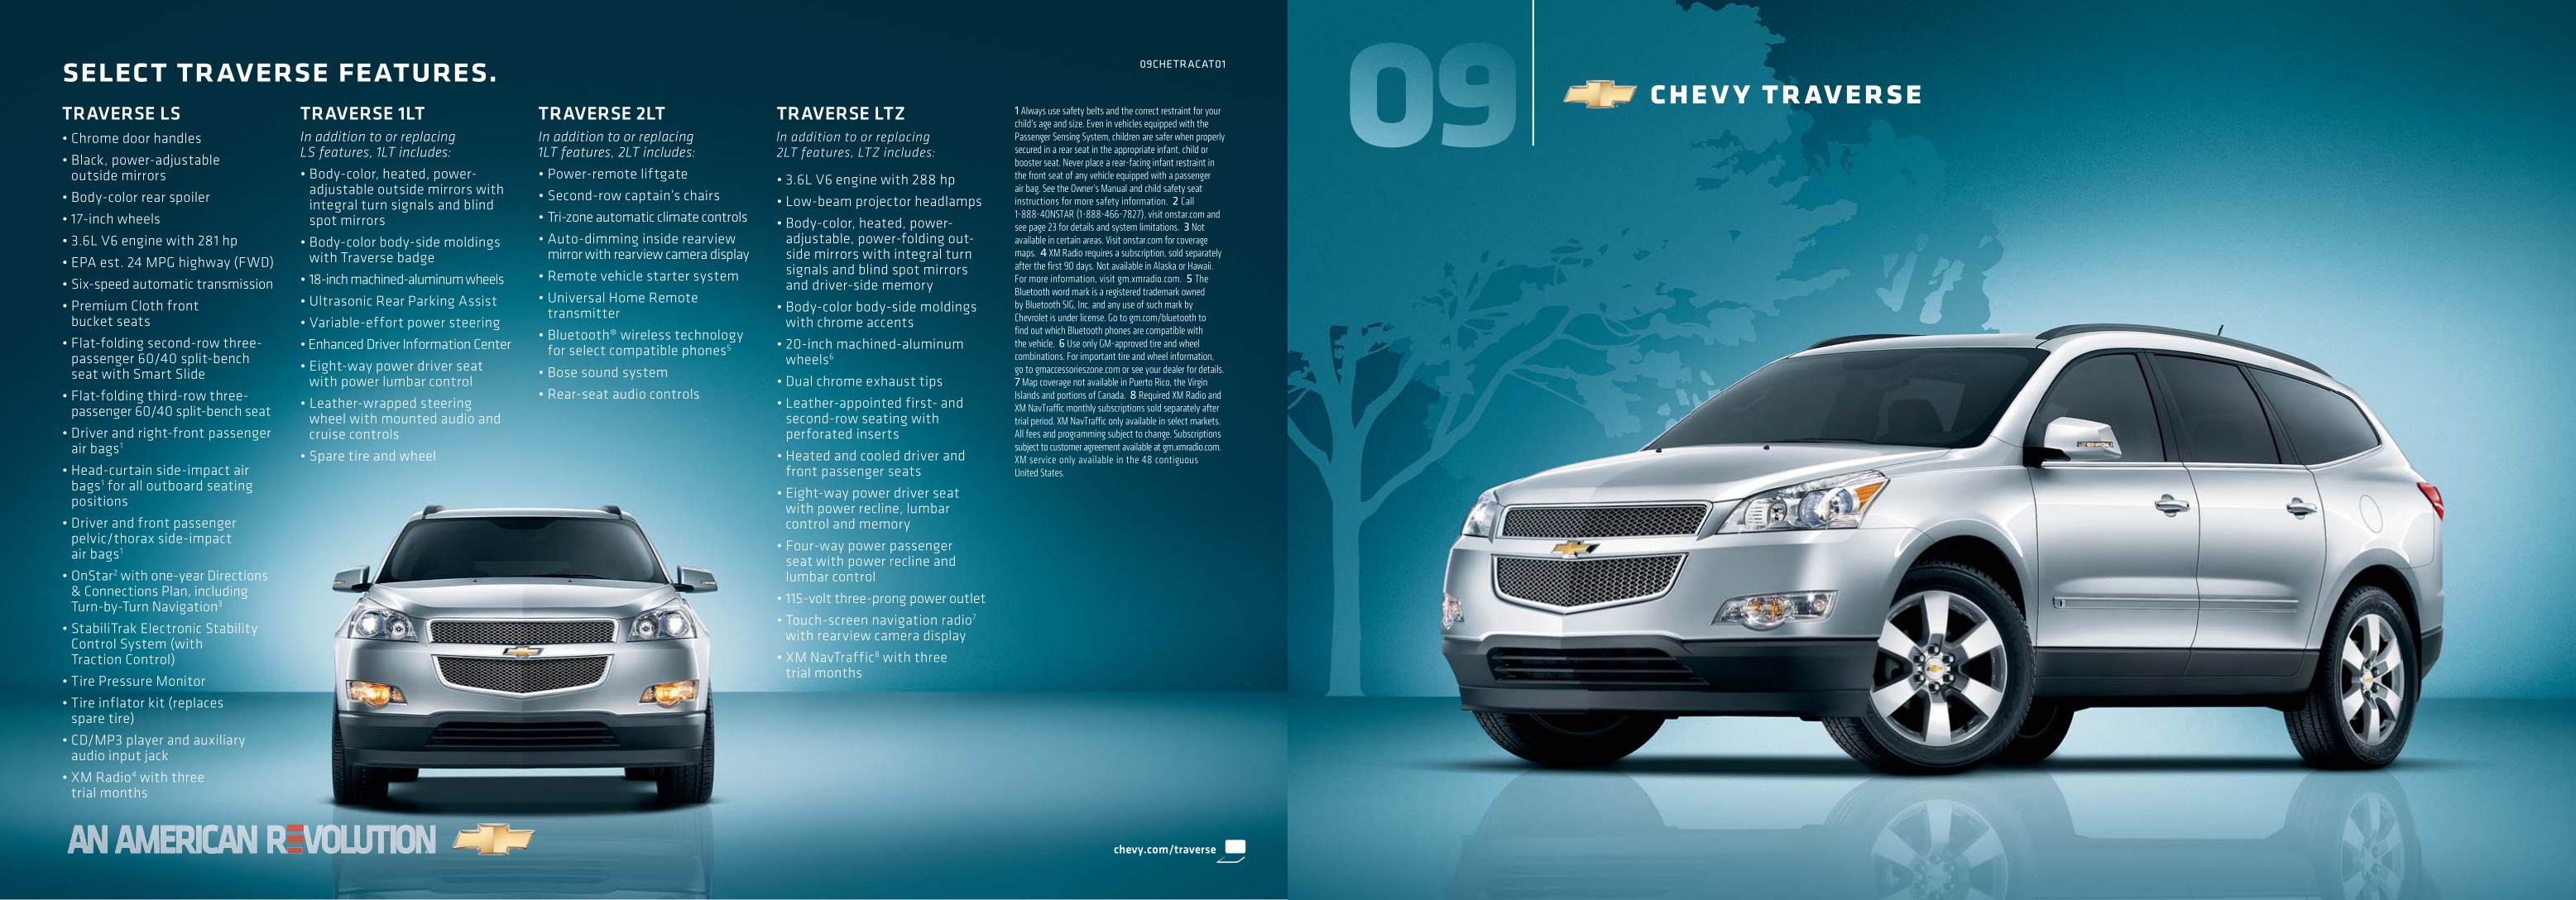 2009 Chevrolet Traverse Brochure